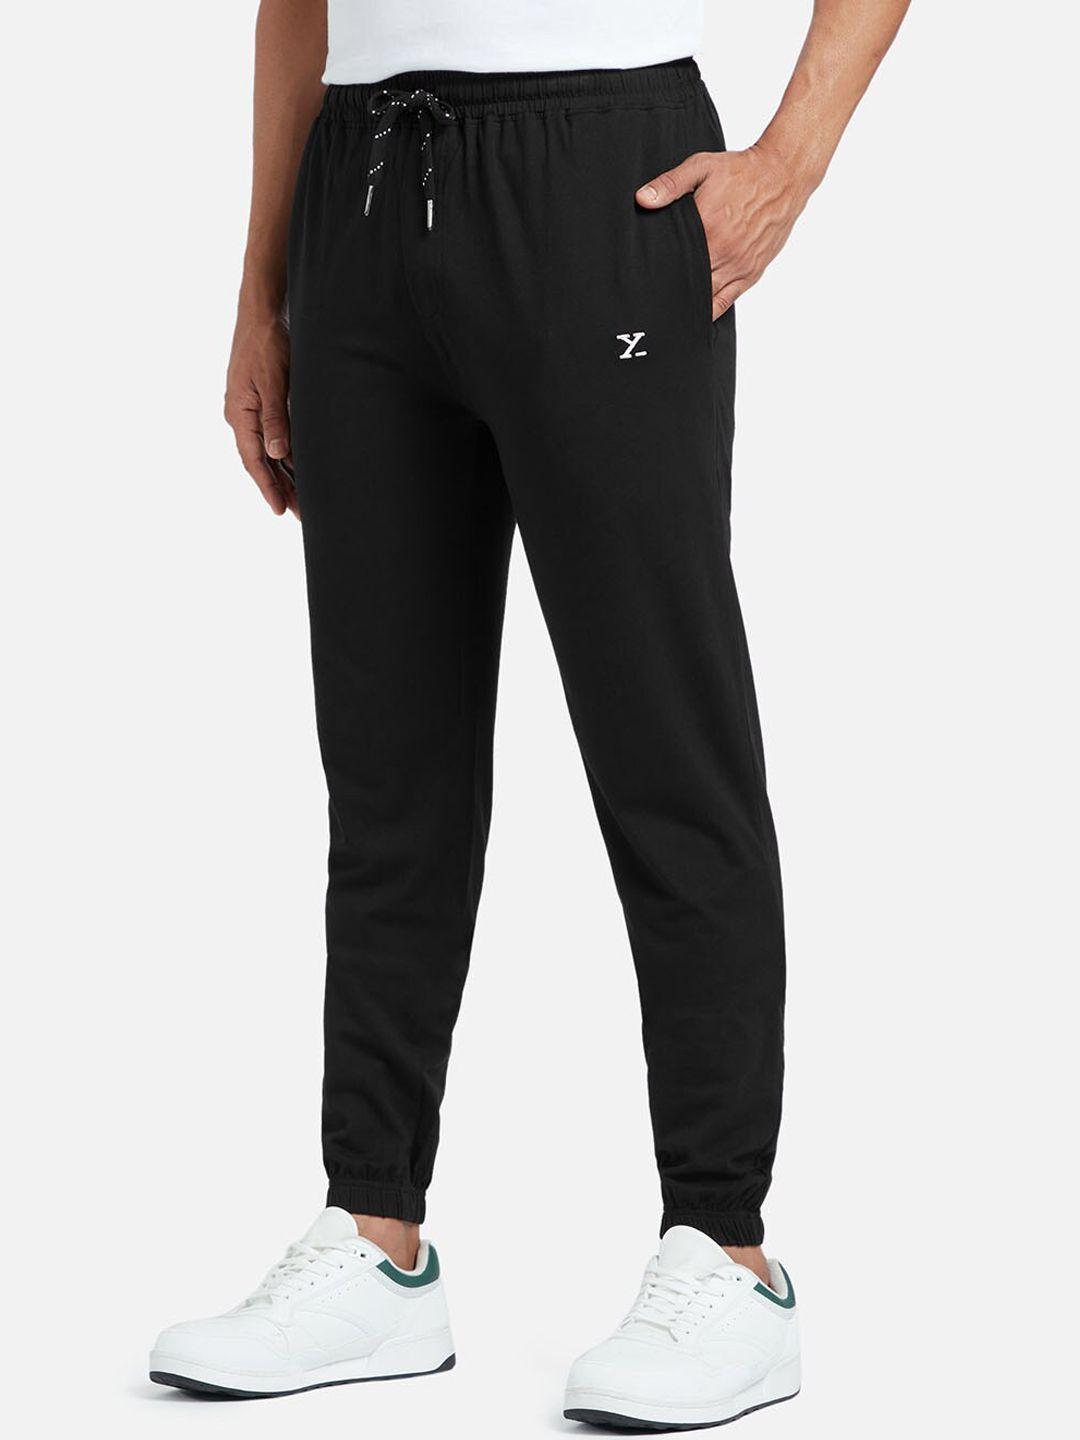 xyxx men black cotton modal solid joggers with zipper pocket